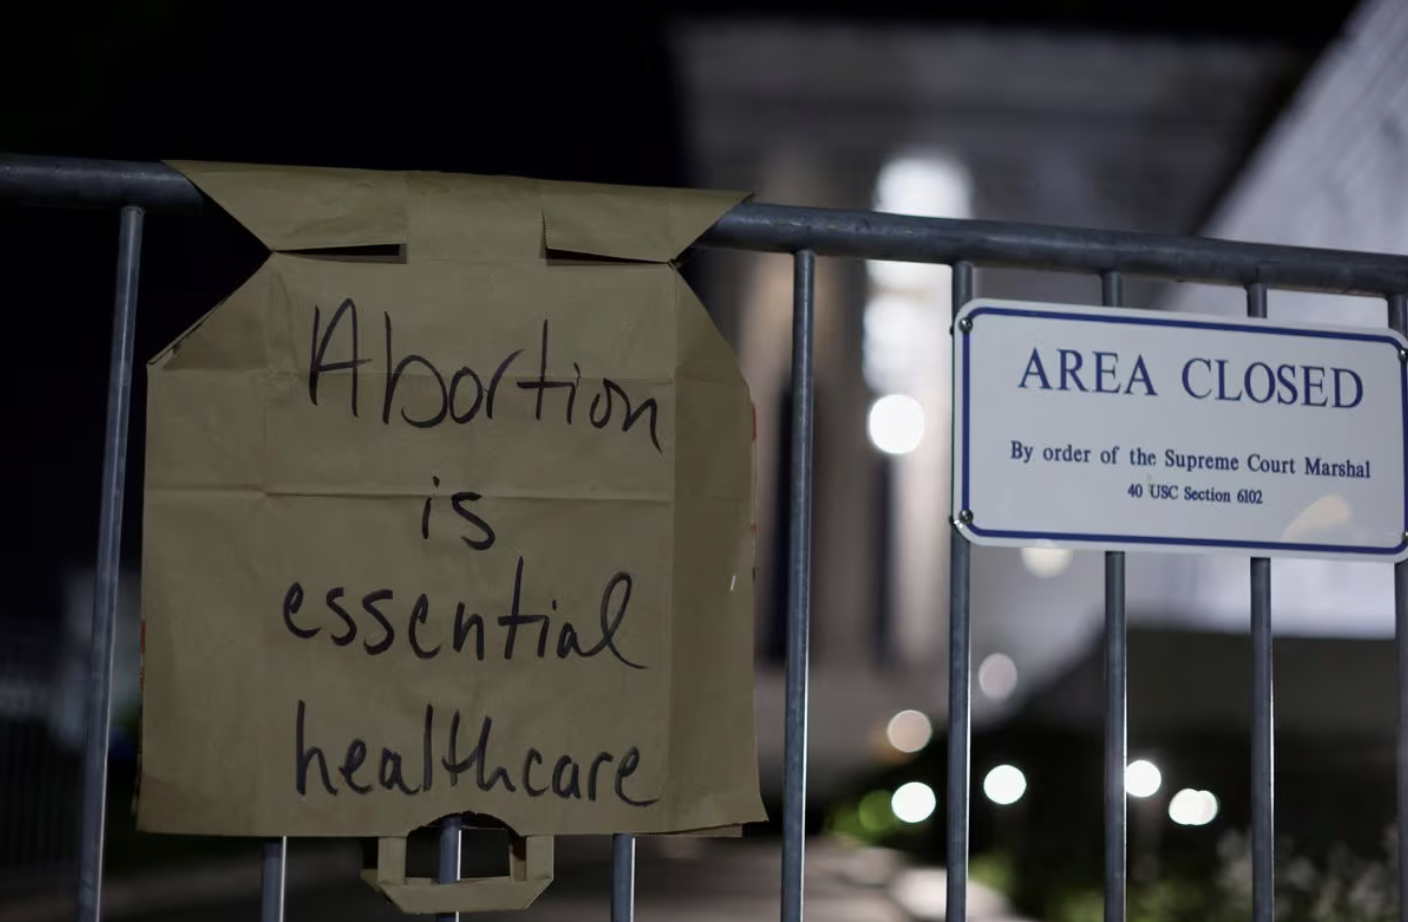 Paper handwritten sign - Abortion is essential healthcare